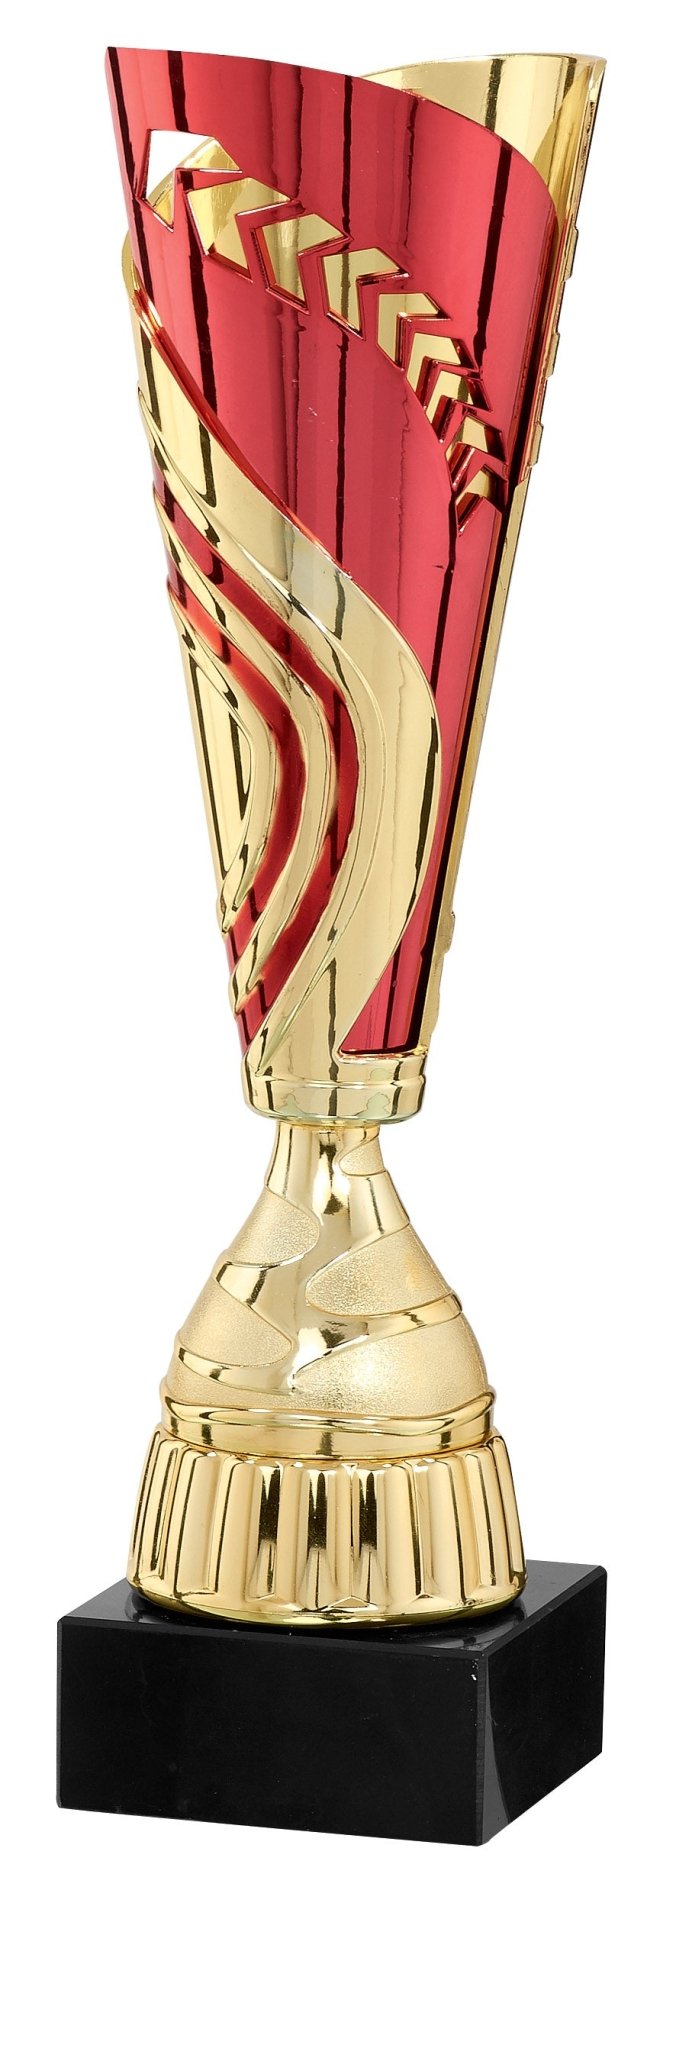 AMC334 Series Trophy Cup Award - AndersonTrophy.com